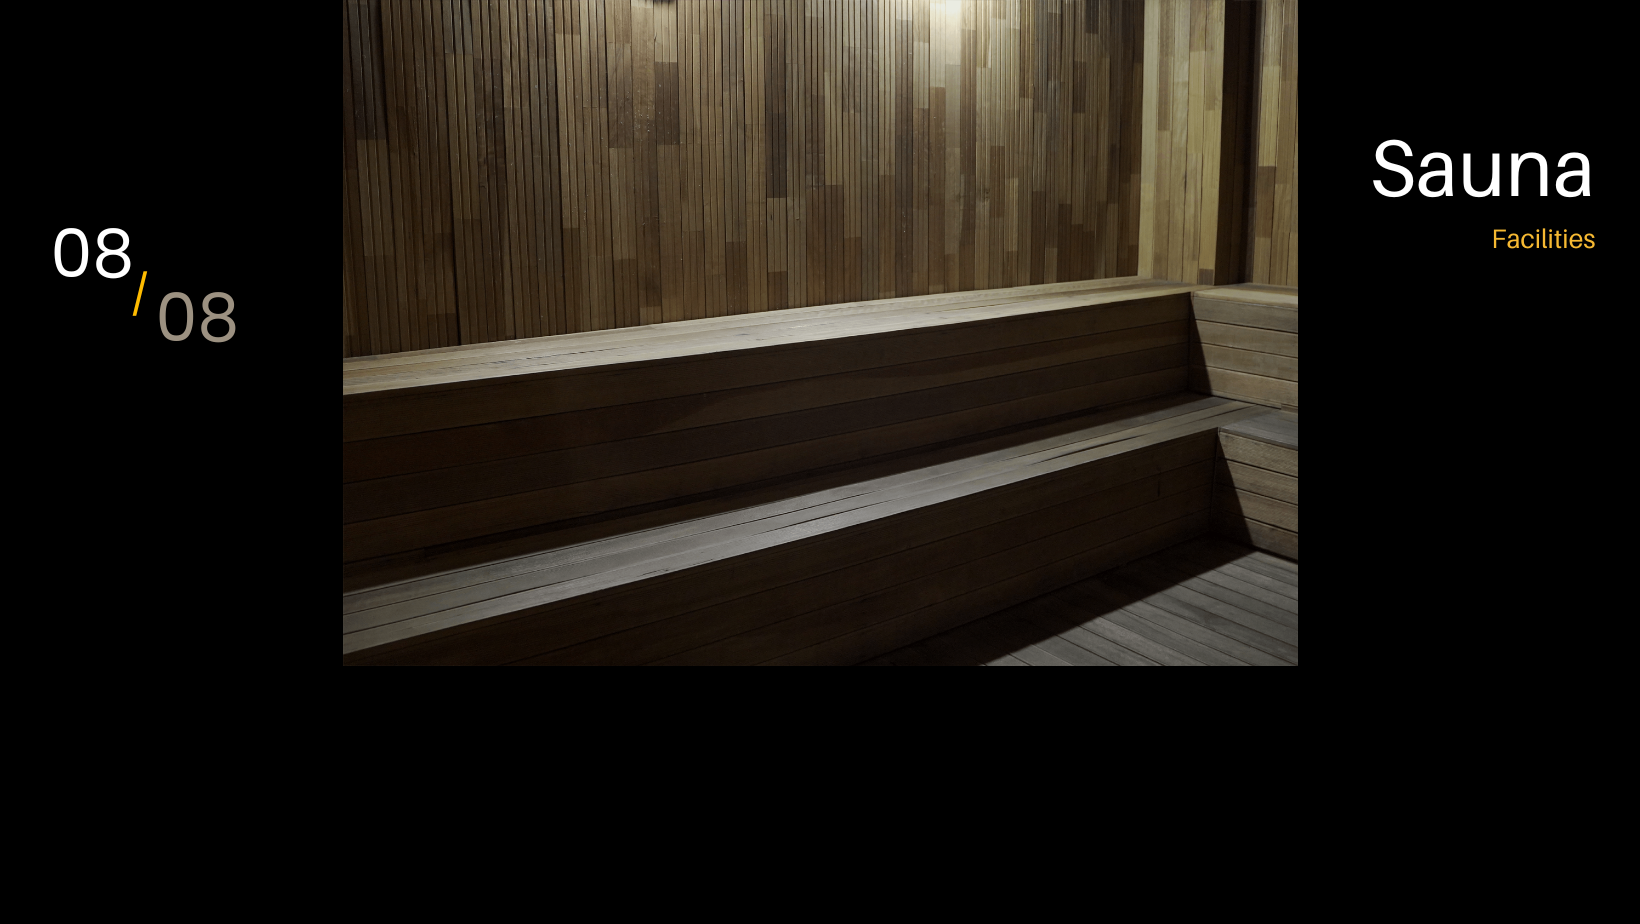 Facilities - Sauna